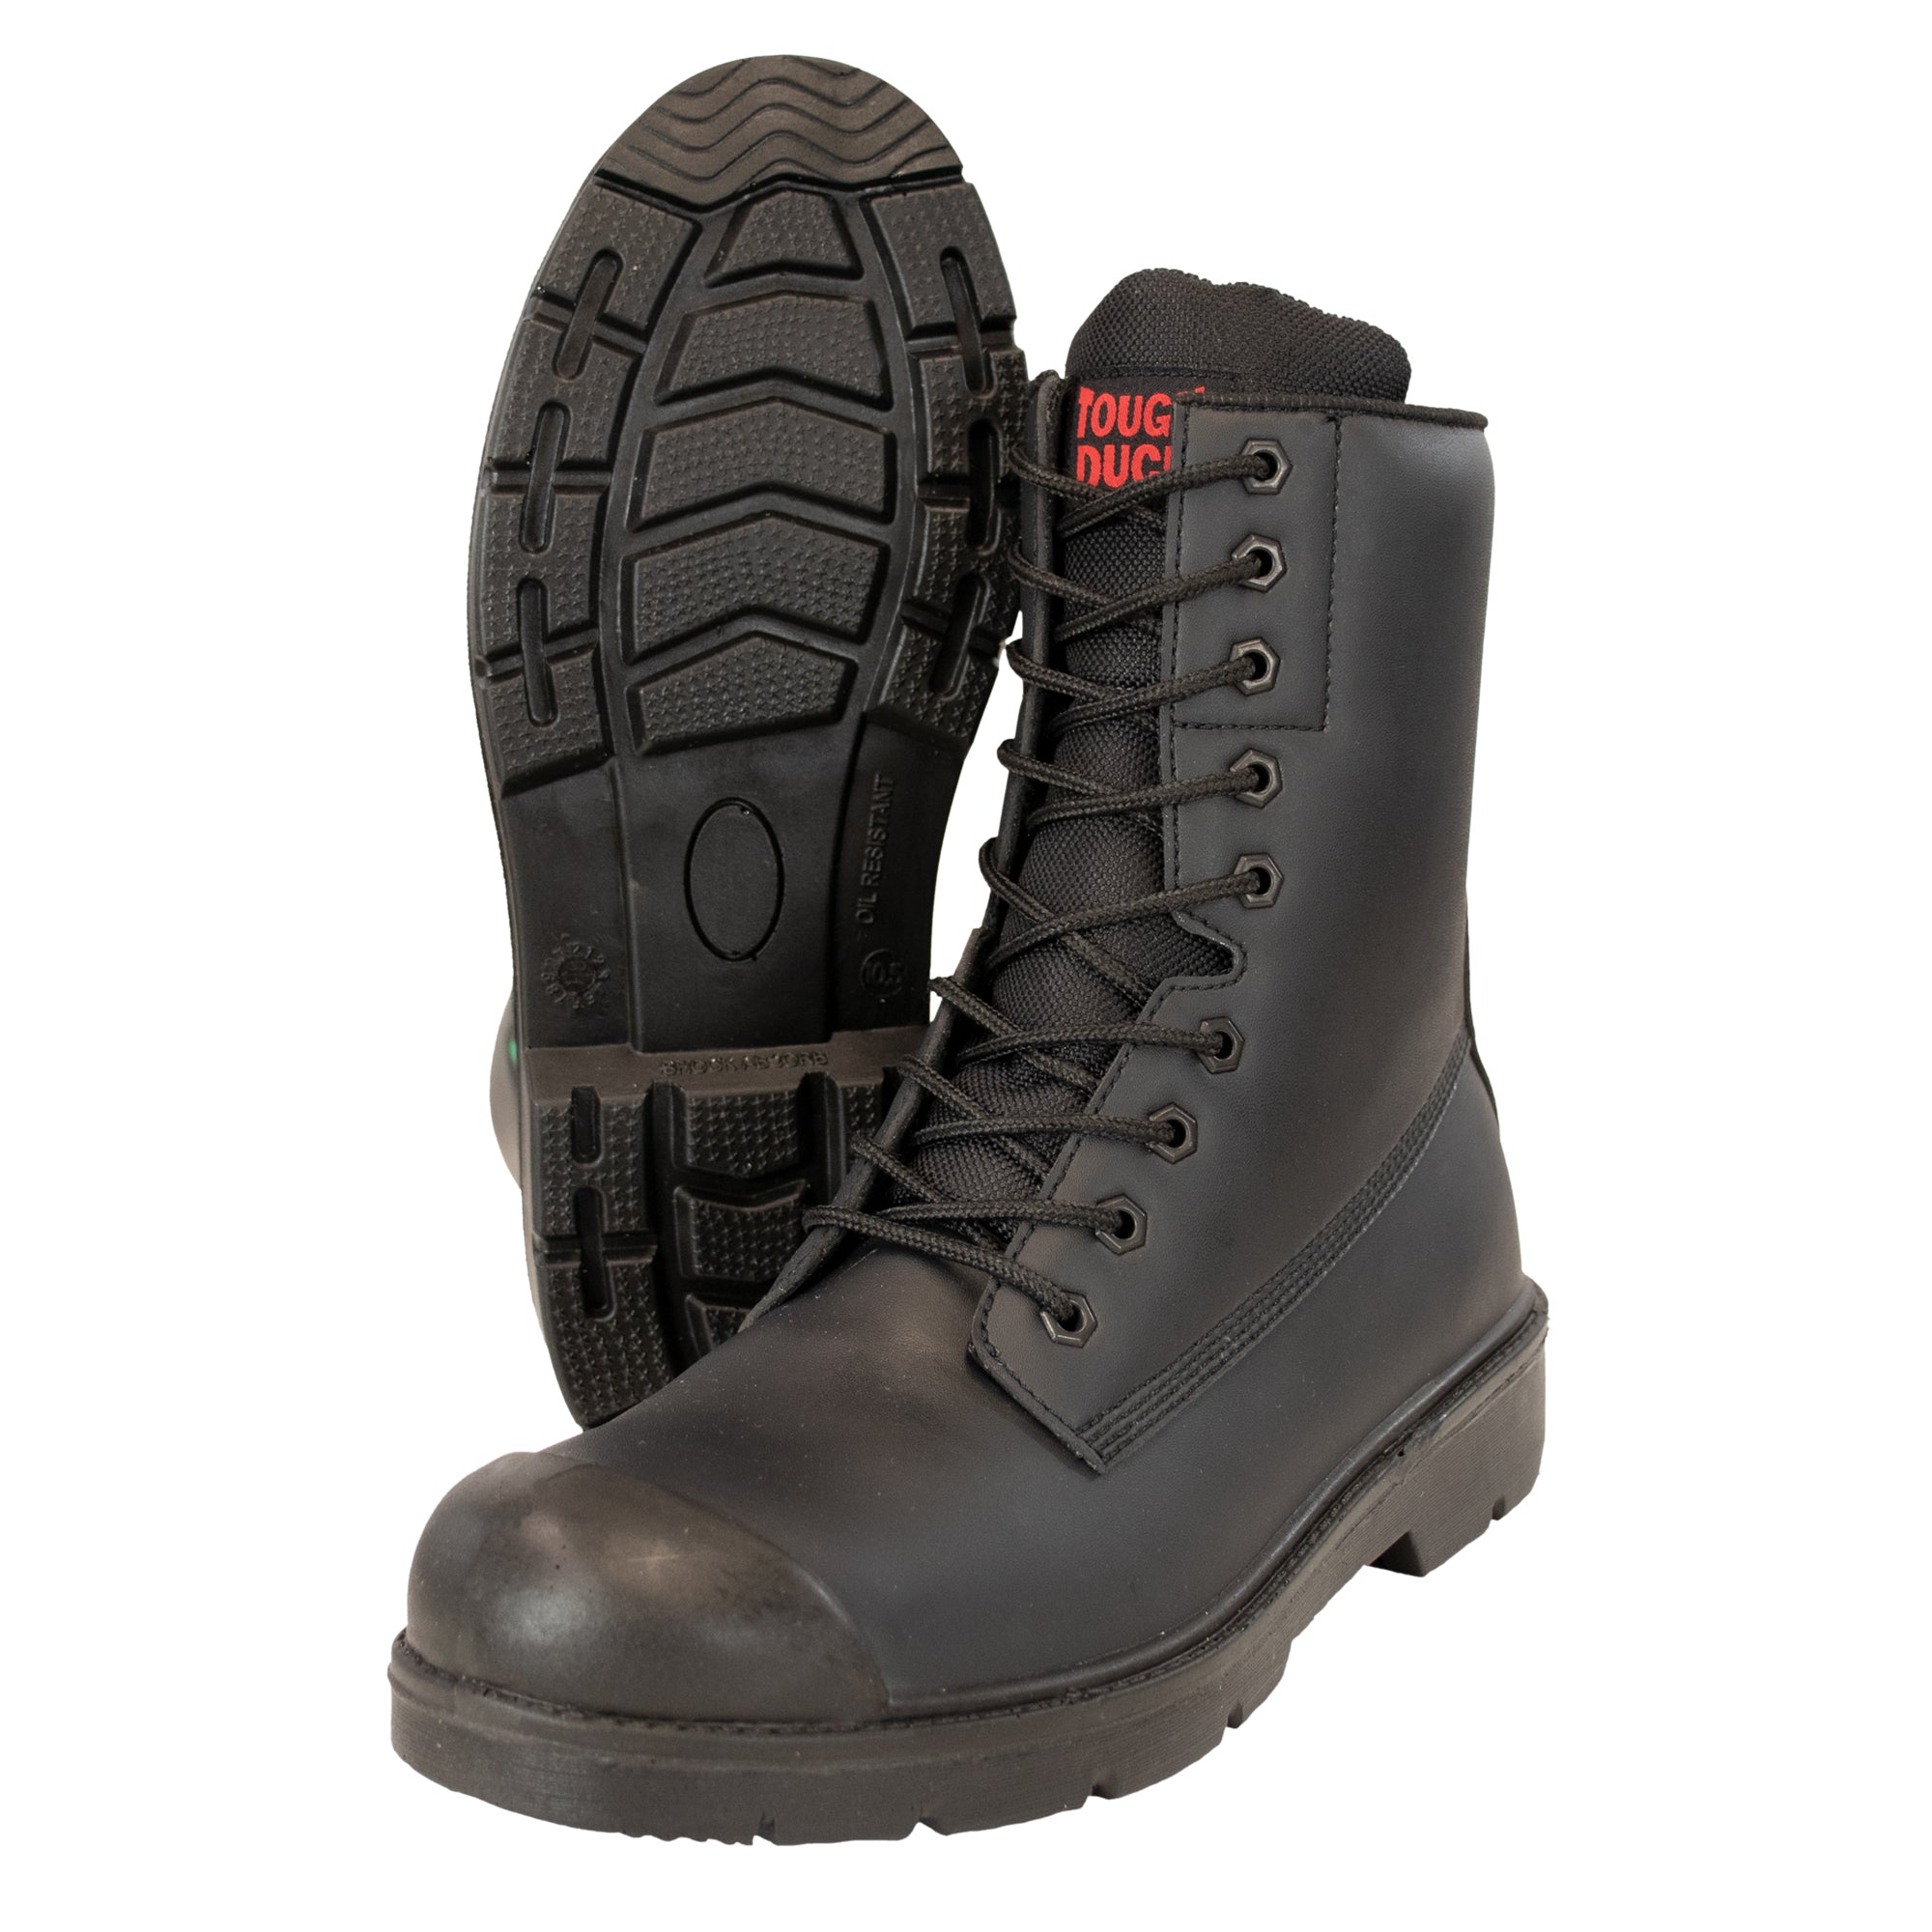 8 inch steel toe work boots